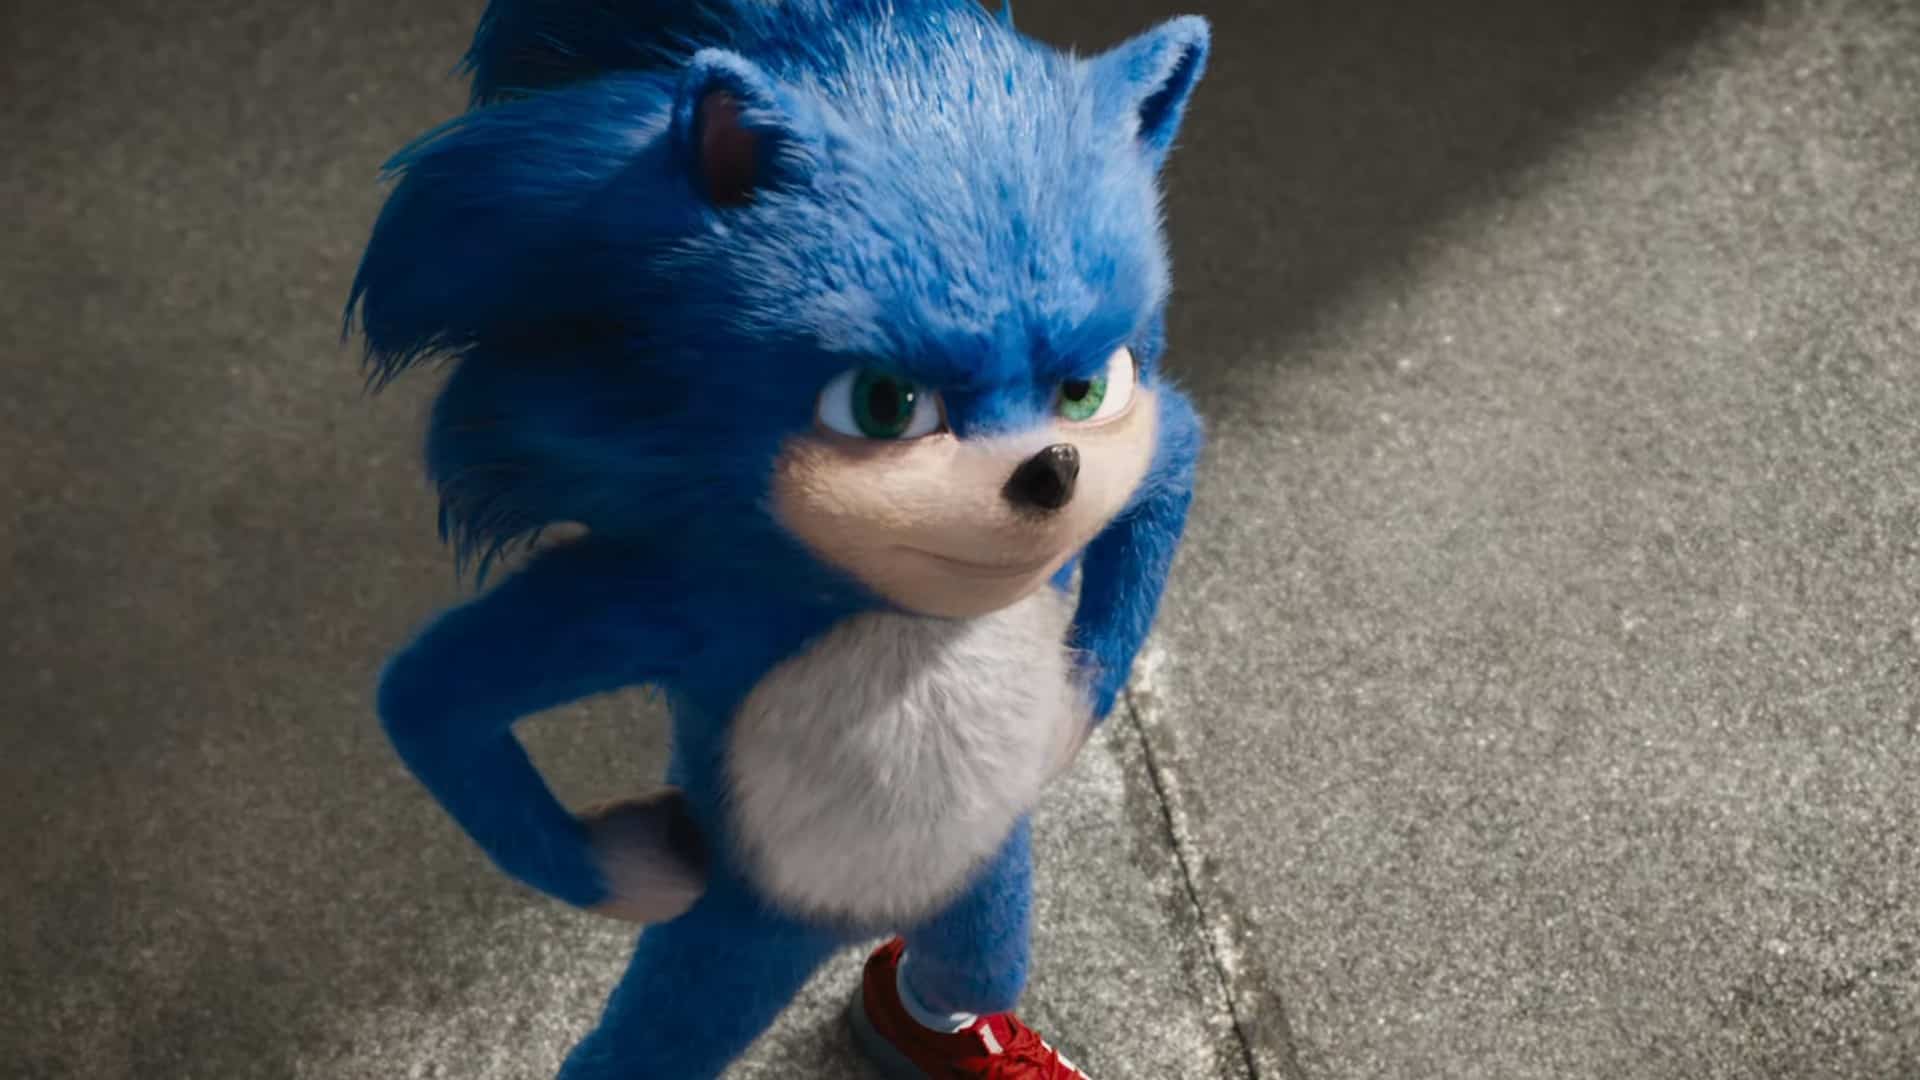 Sonic the Hedgehog movie trailer bad press